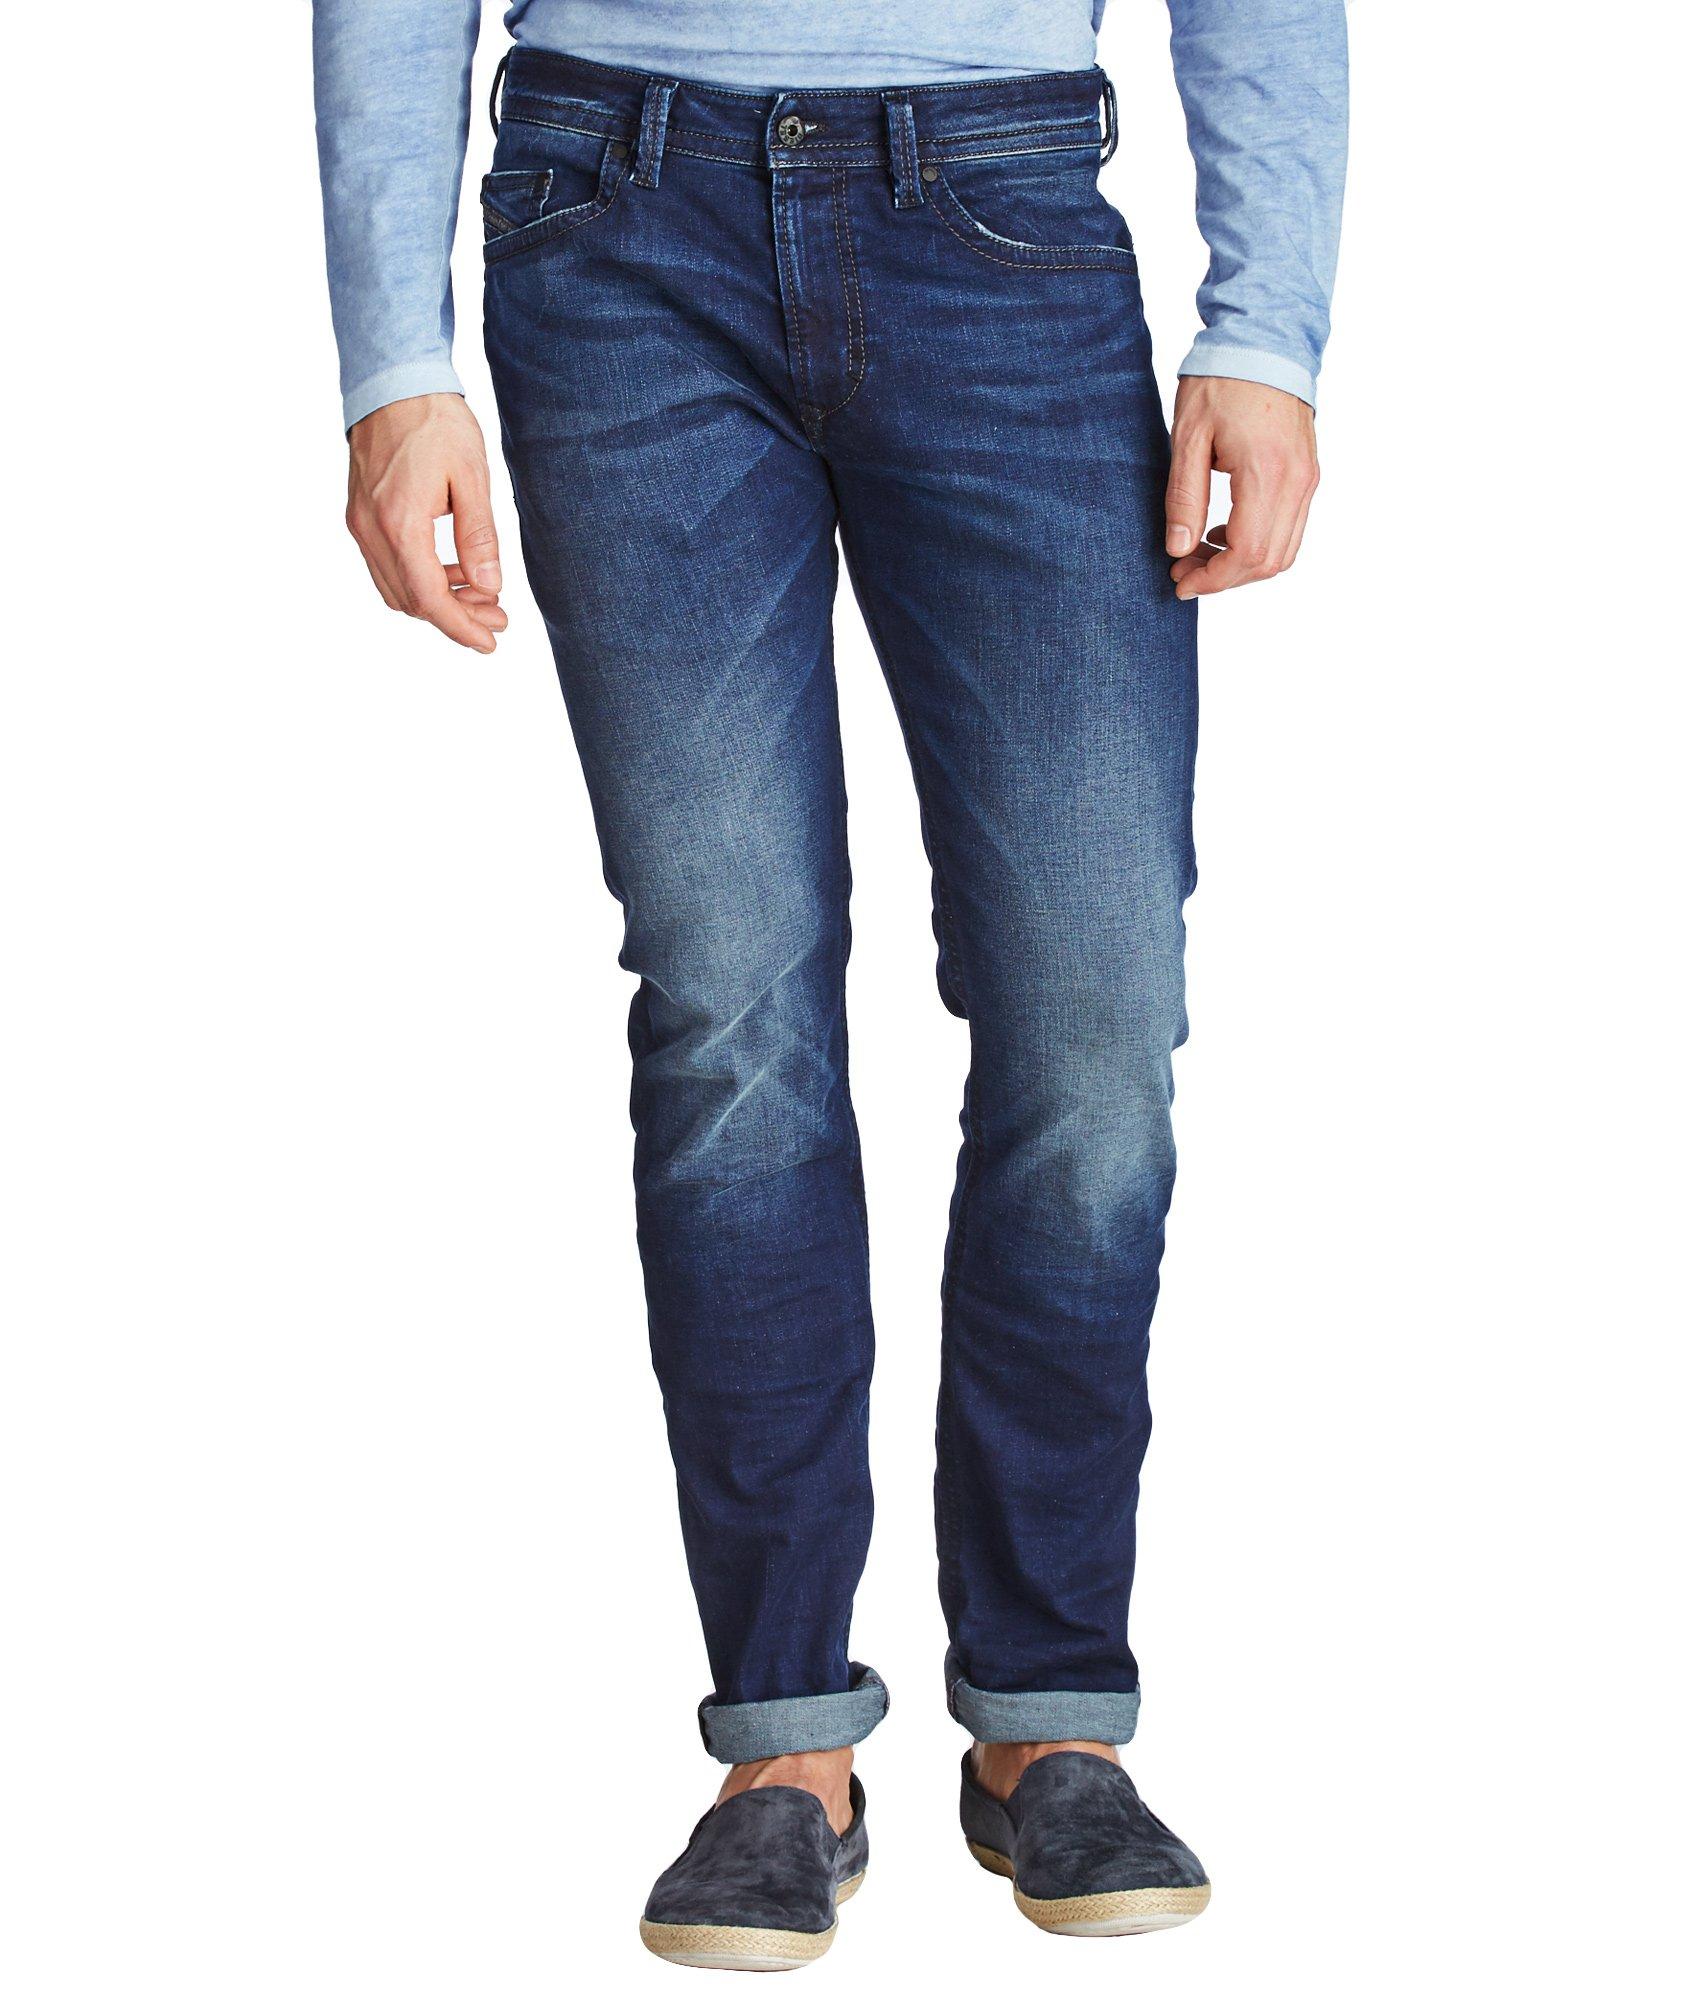 Thavar Slim Fit Jeans image 0